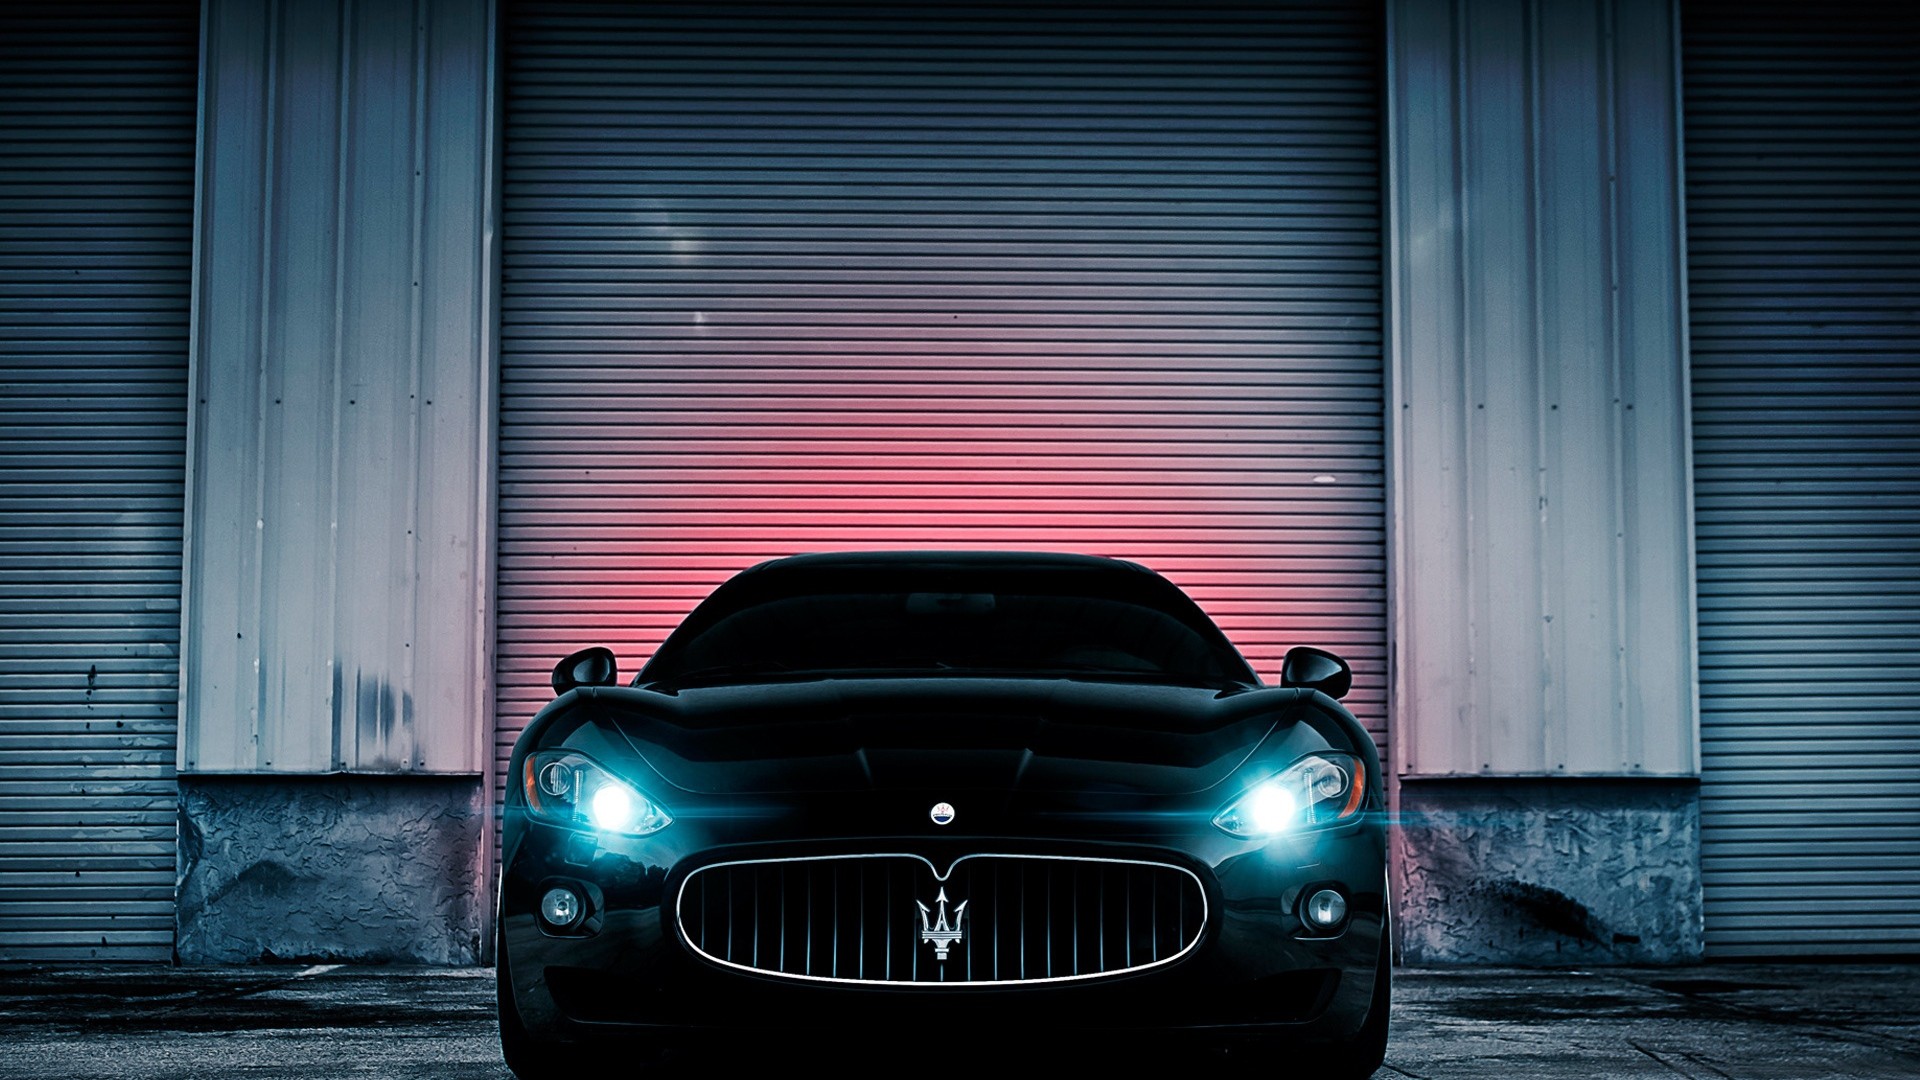 car, Sports Car, Black Cars, Maserati, Maserati GranTurismo, Lights, Urban, Garages, Building Wallpaper